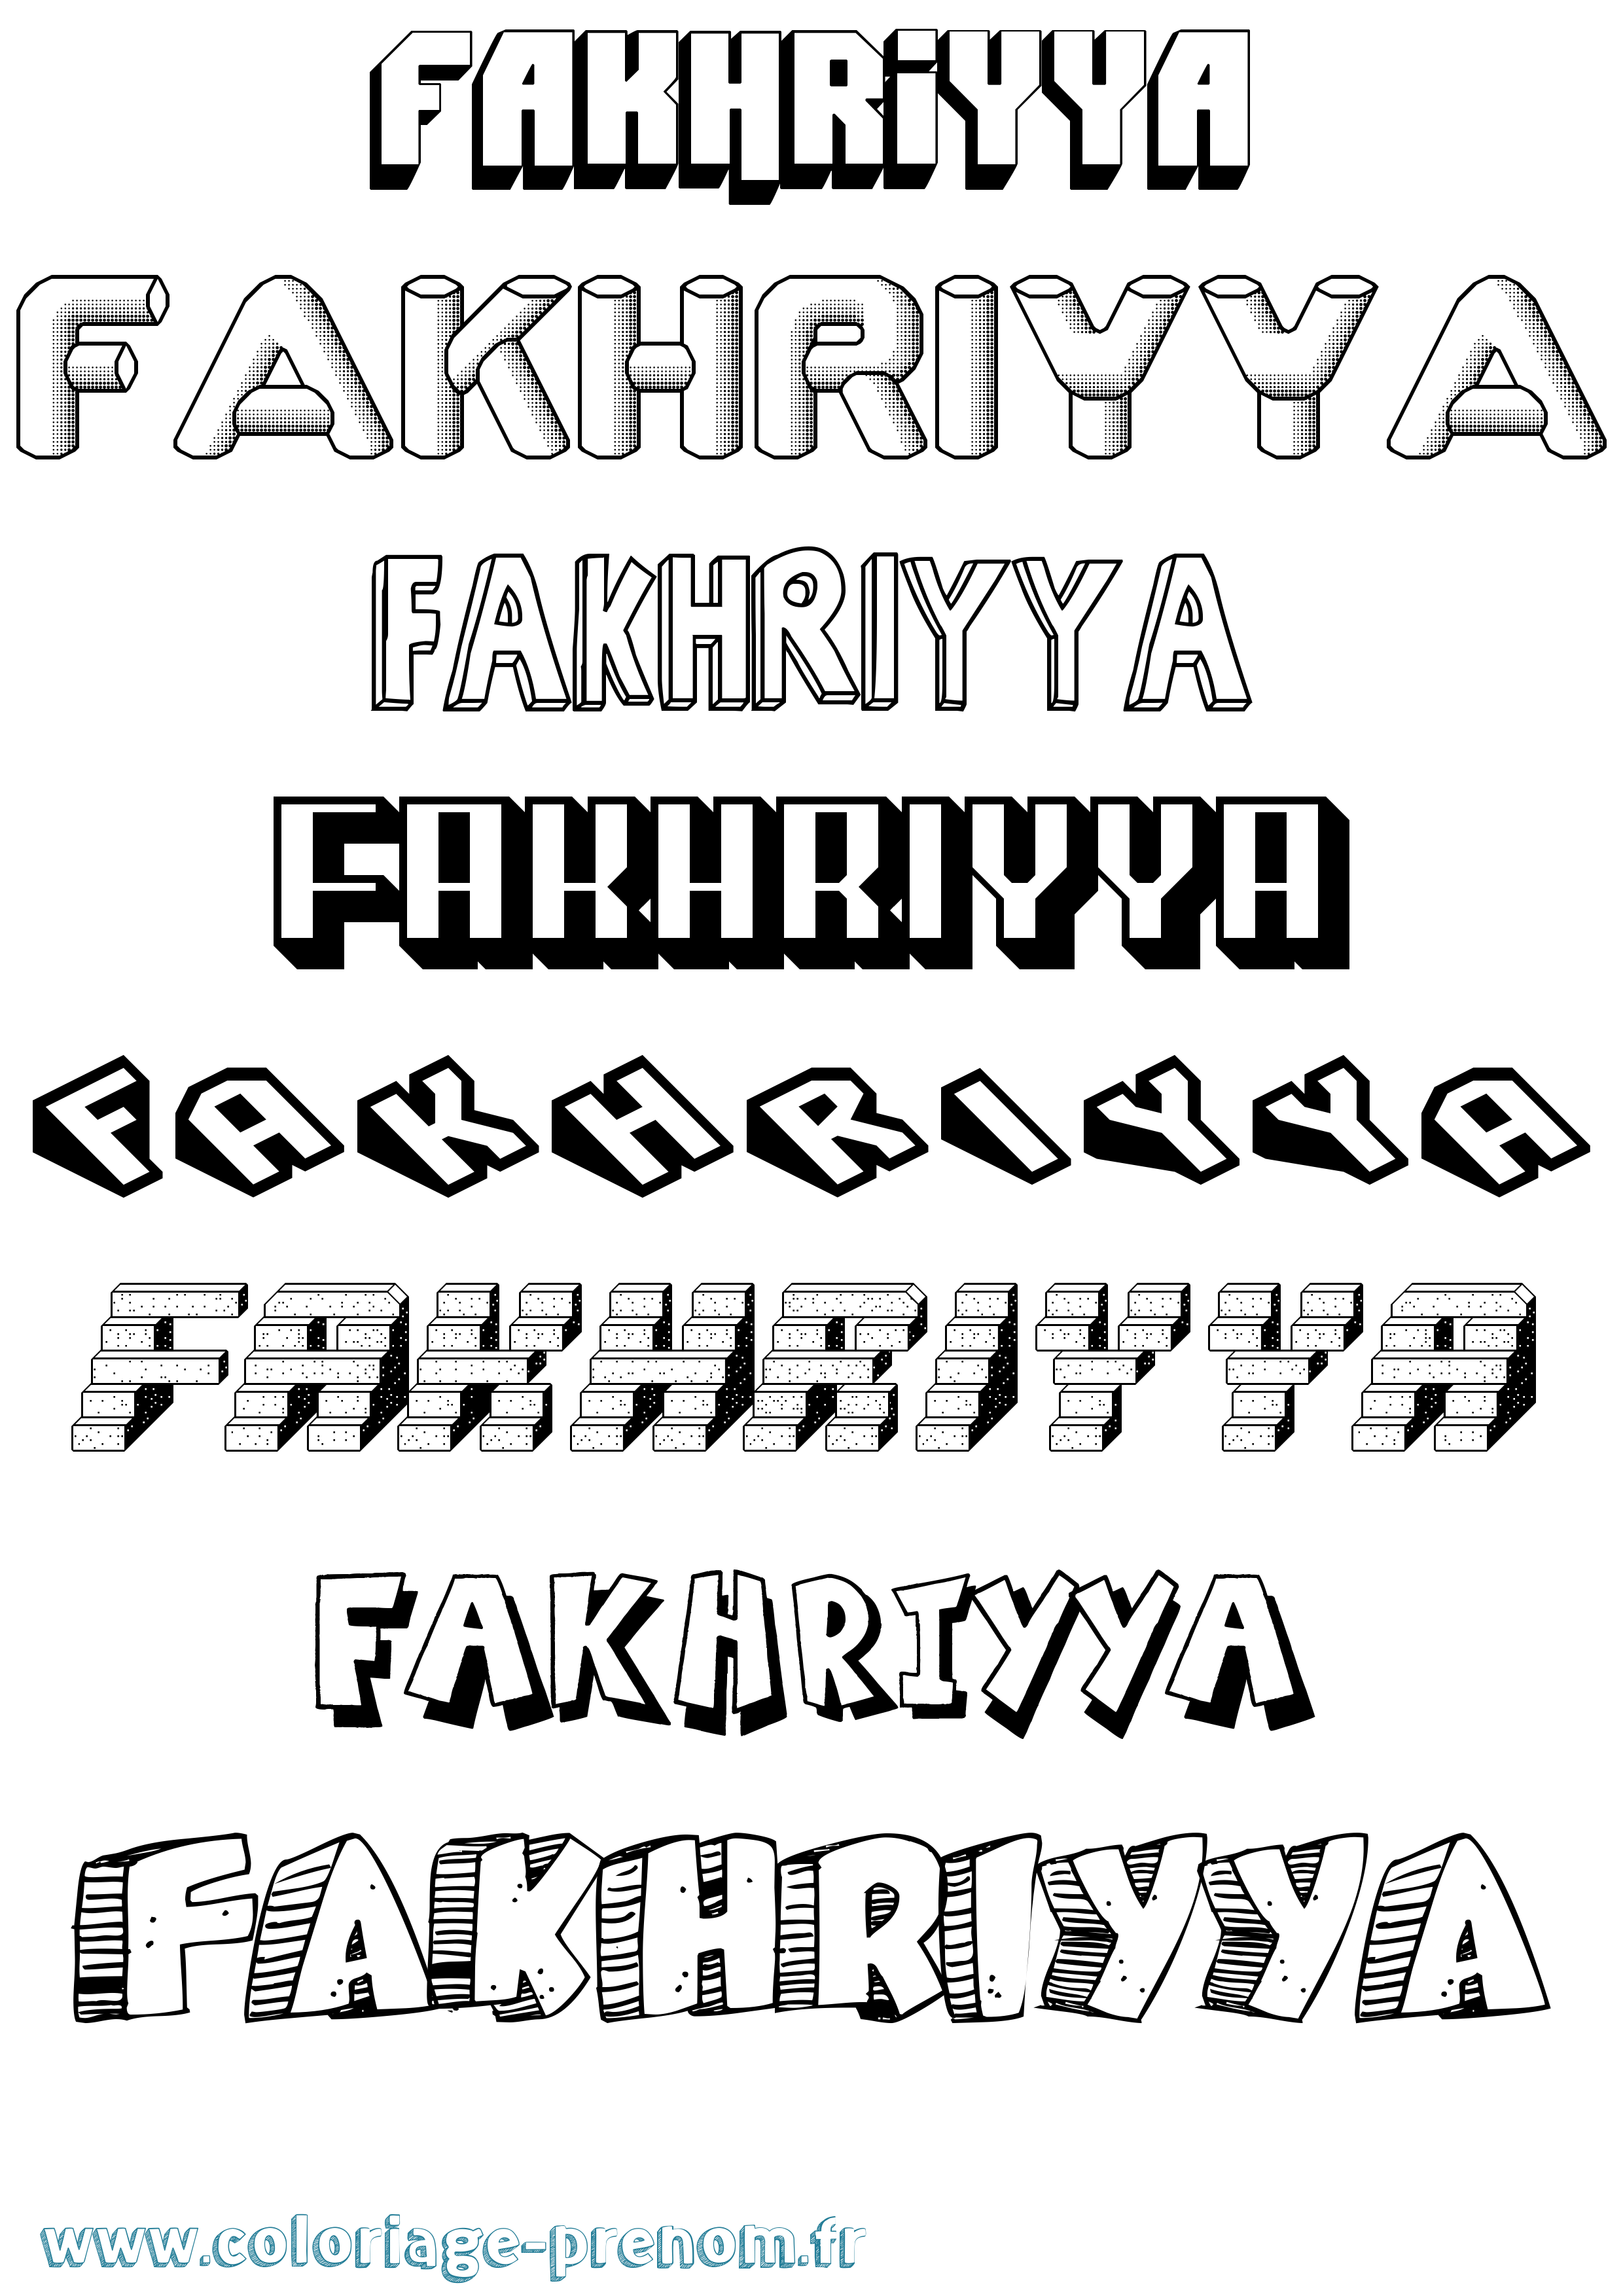 Coloriage prénom Fakhriyya Effet 3D